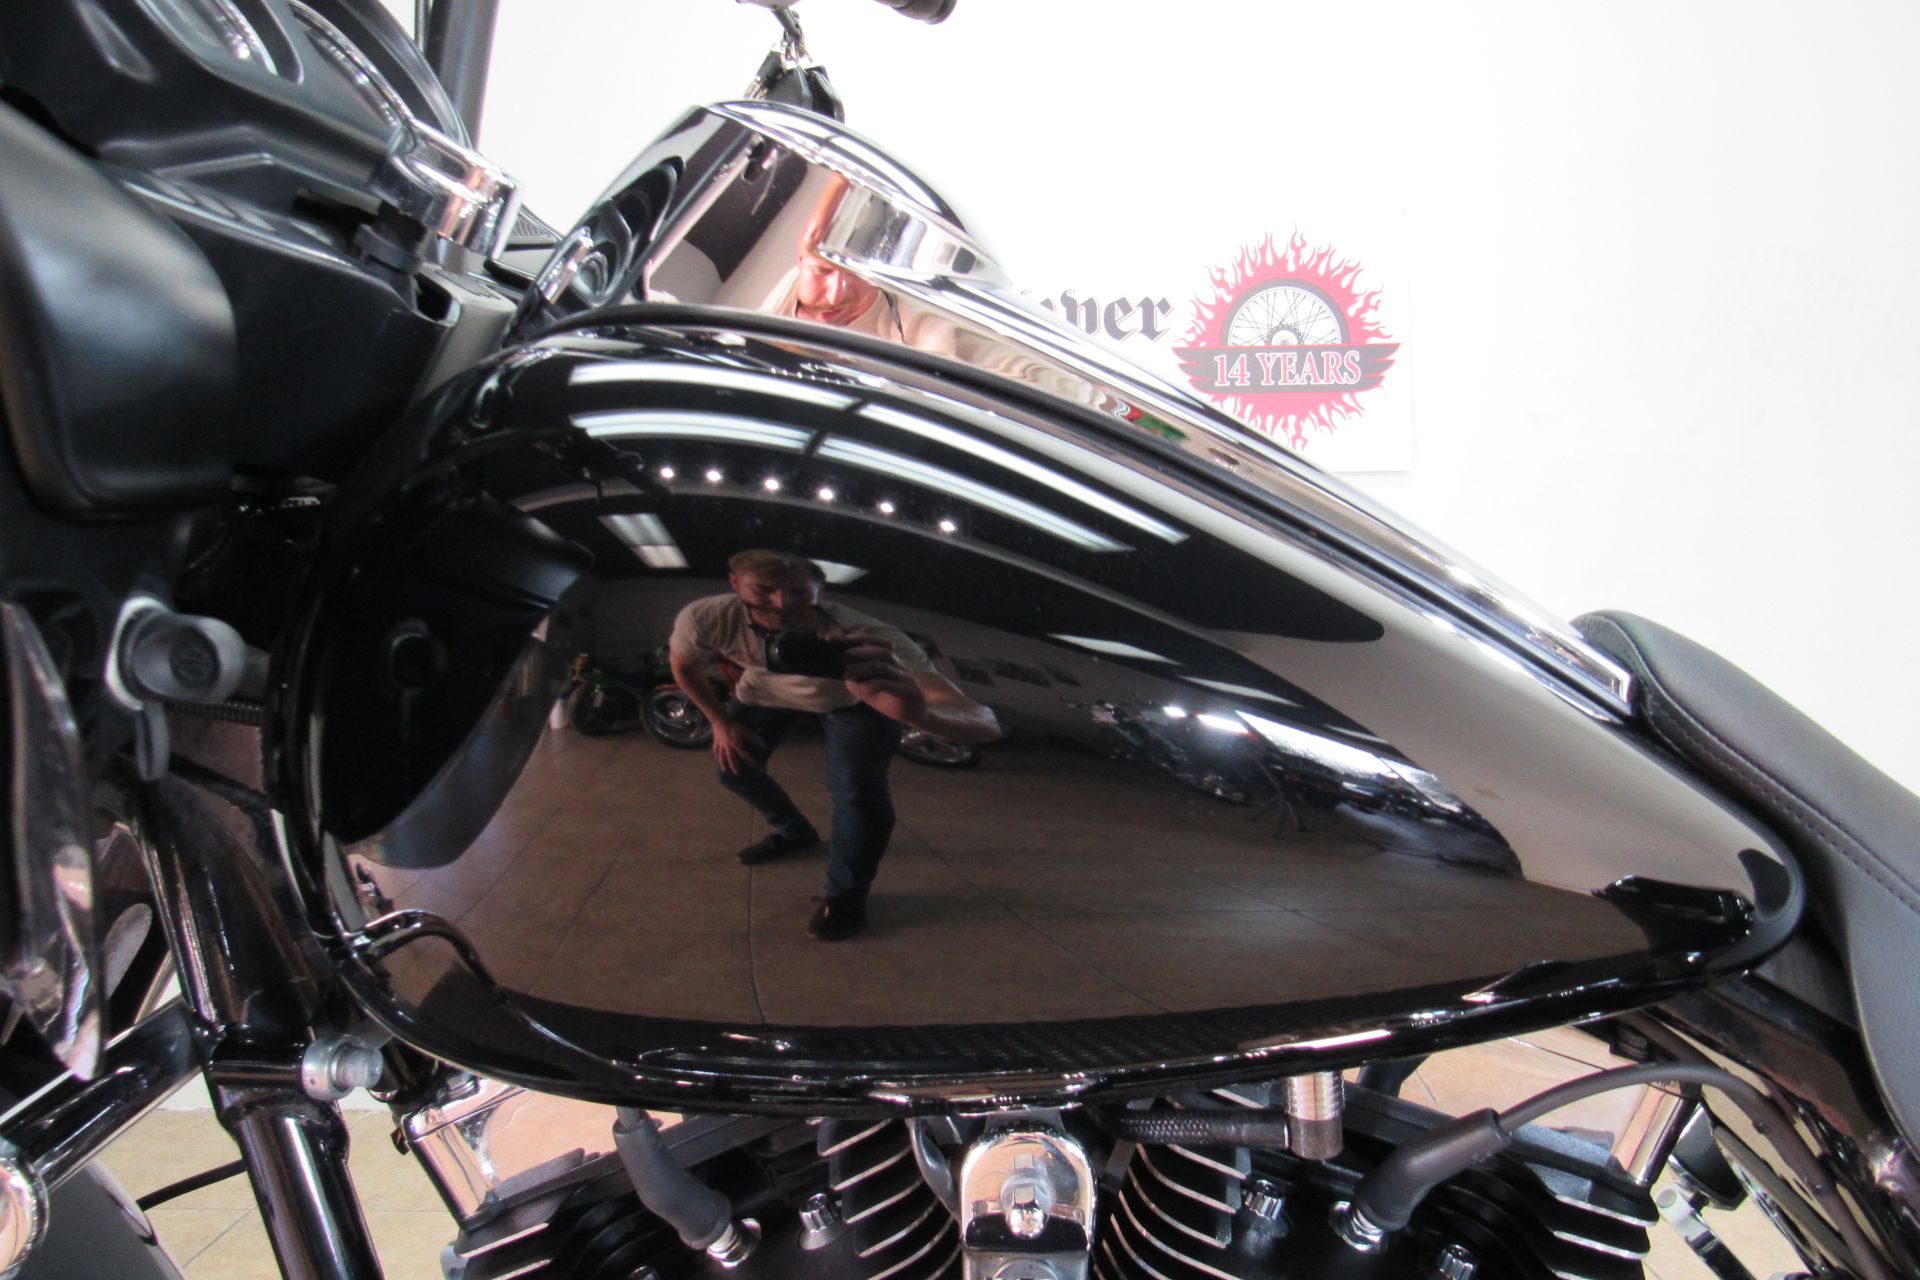 2015 Harley-Davidson Road Glide® Special in Temecula, California - Photo 8